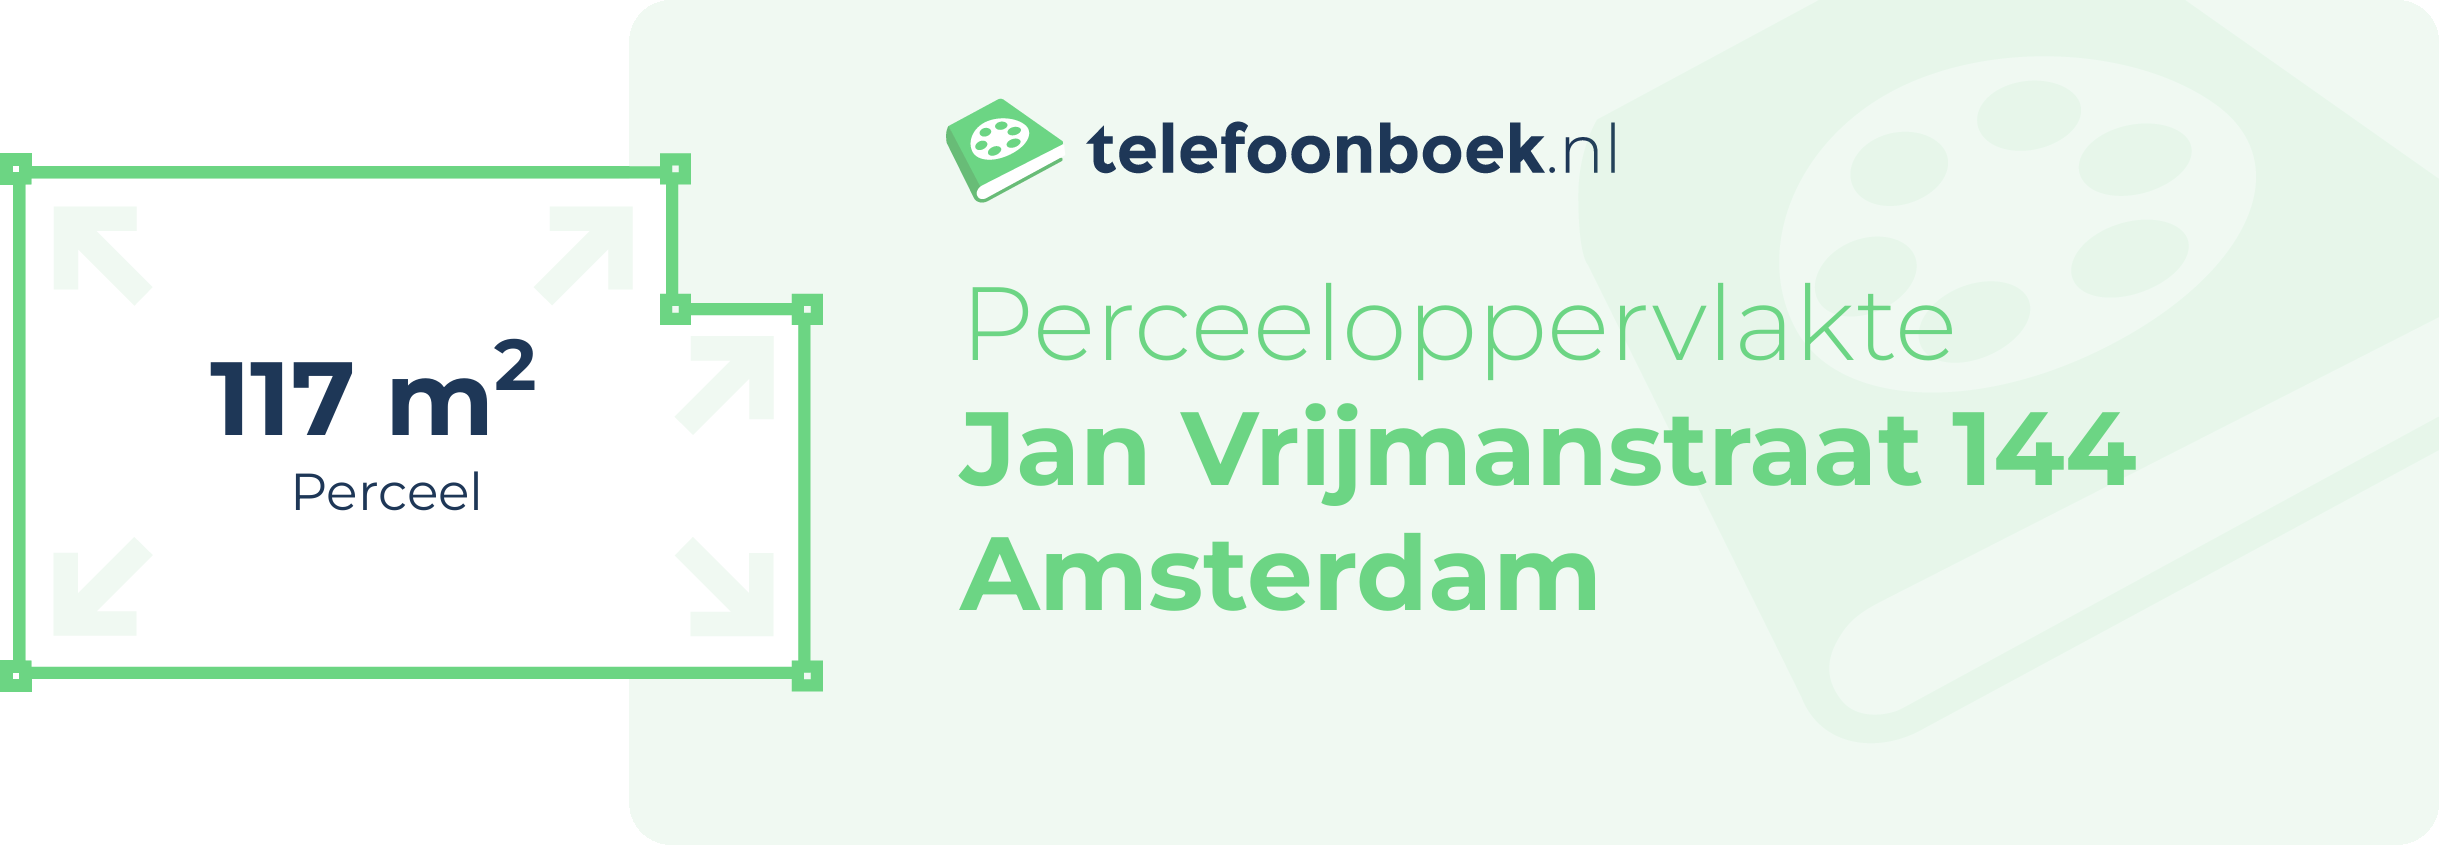 Perceeloppervlakte Jan Vrijmanstraat 144 Amsterdam